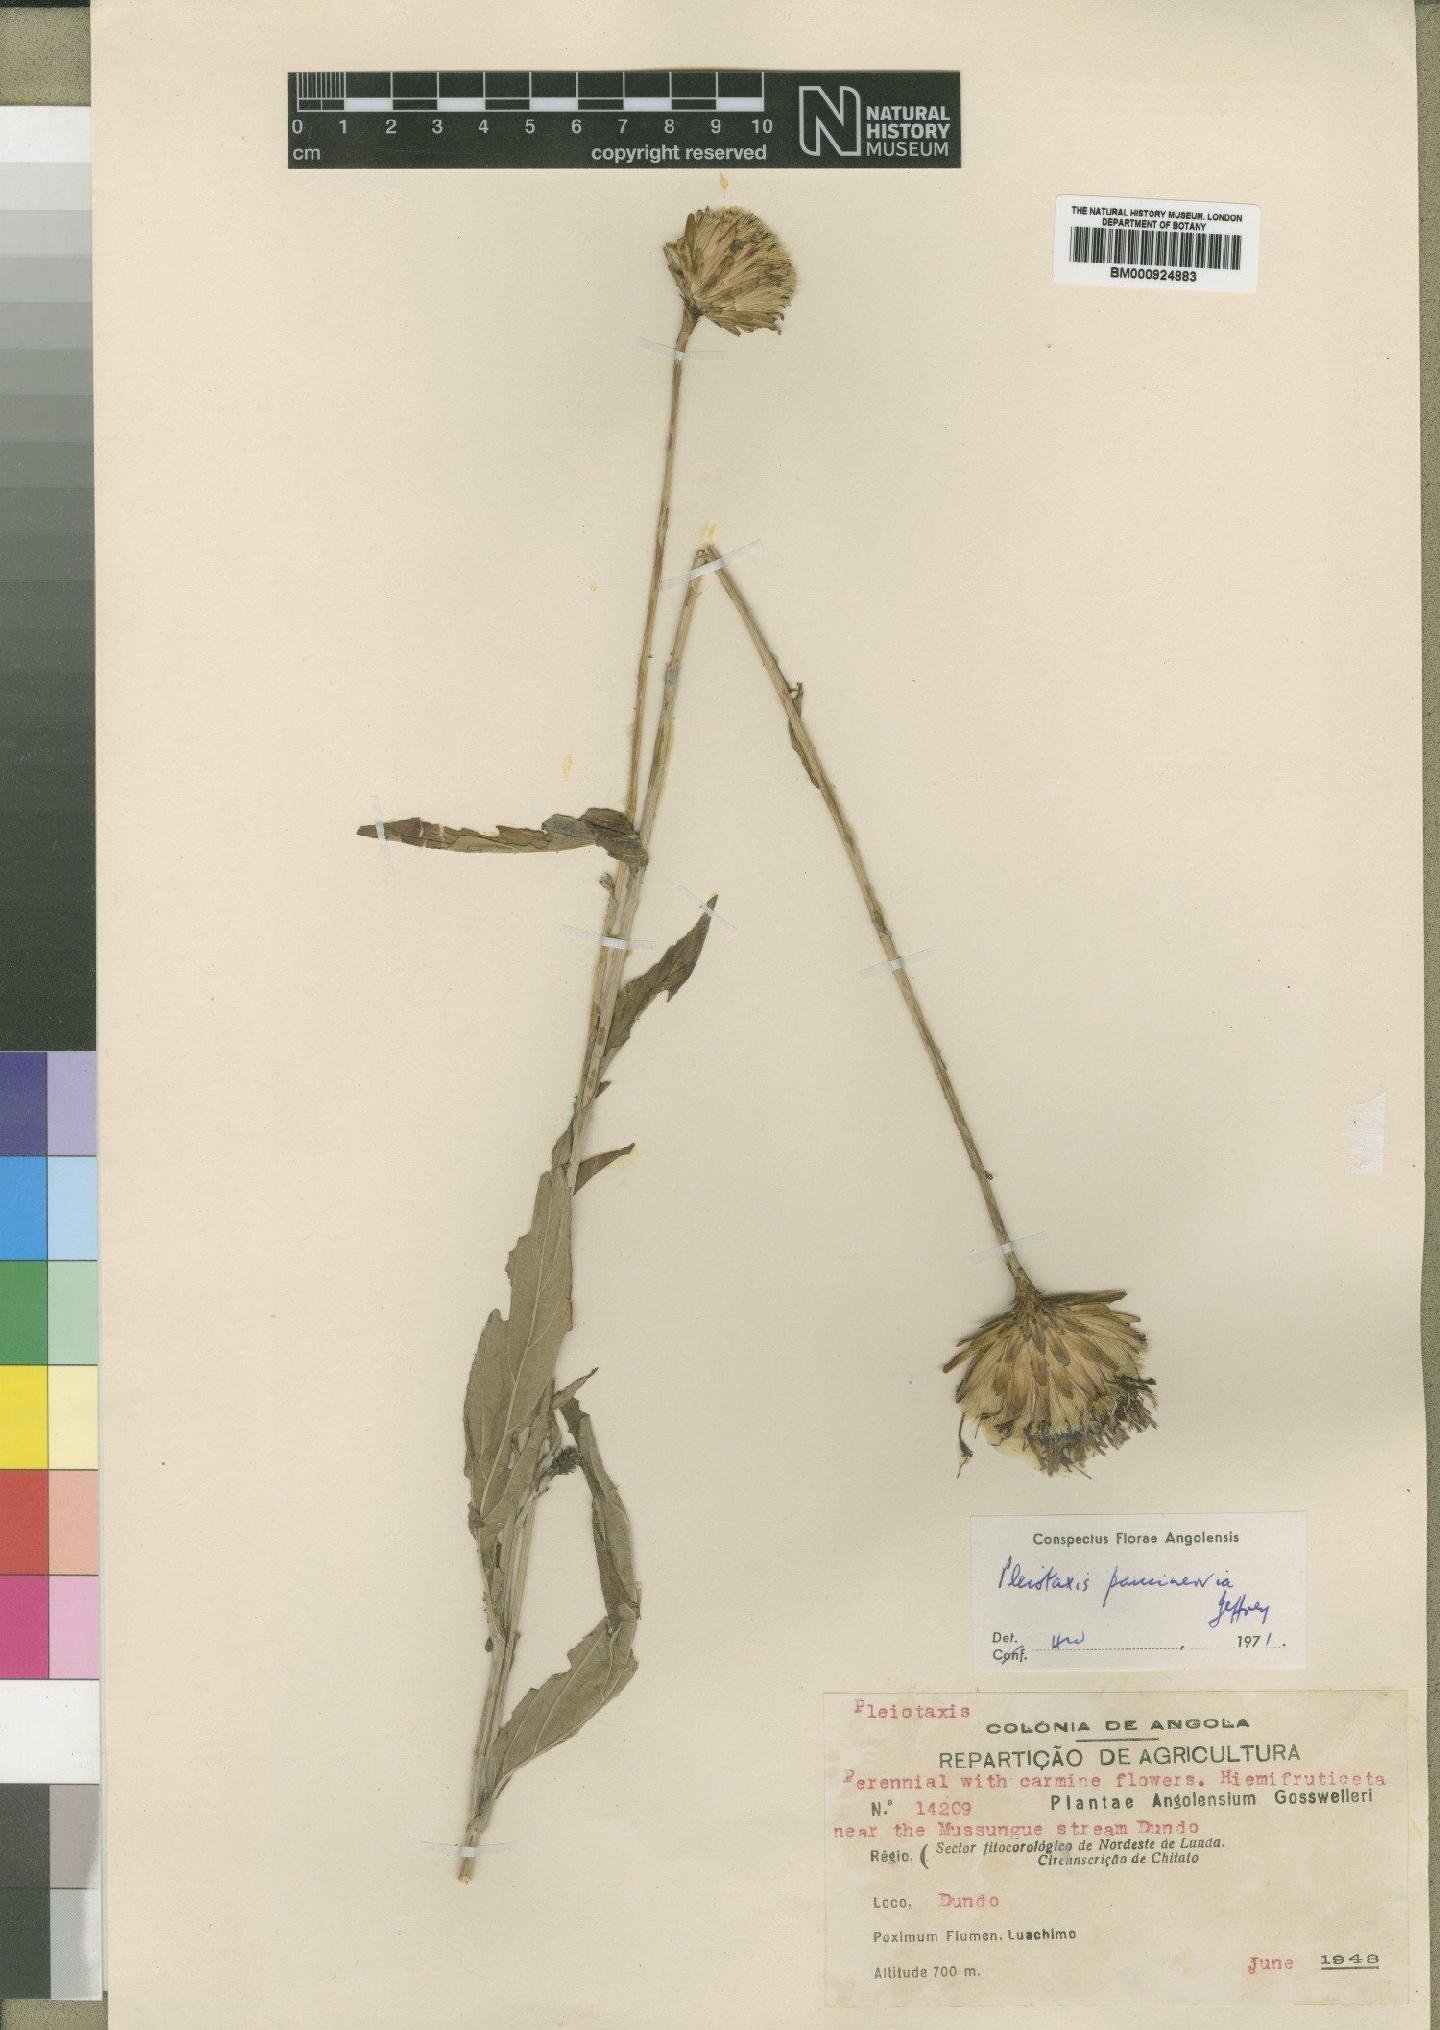 To NHMUK collection (Pleiotaxis paucinervia Jeffrey; Isotype; NHMUK:ecatalogue:4553718)